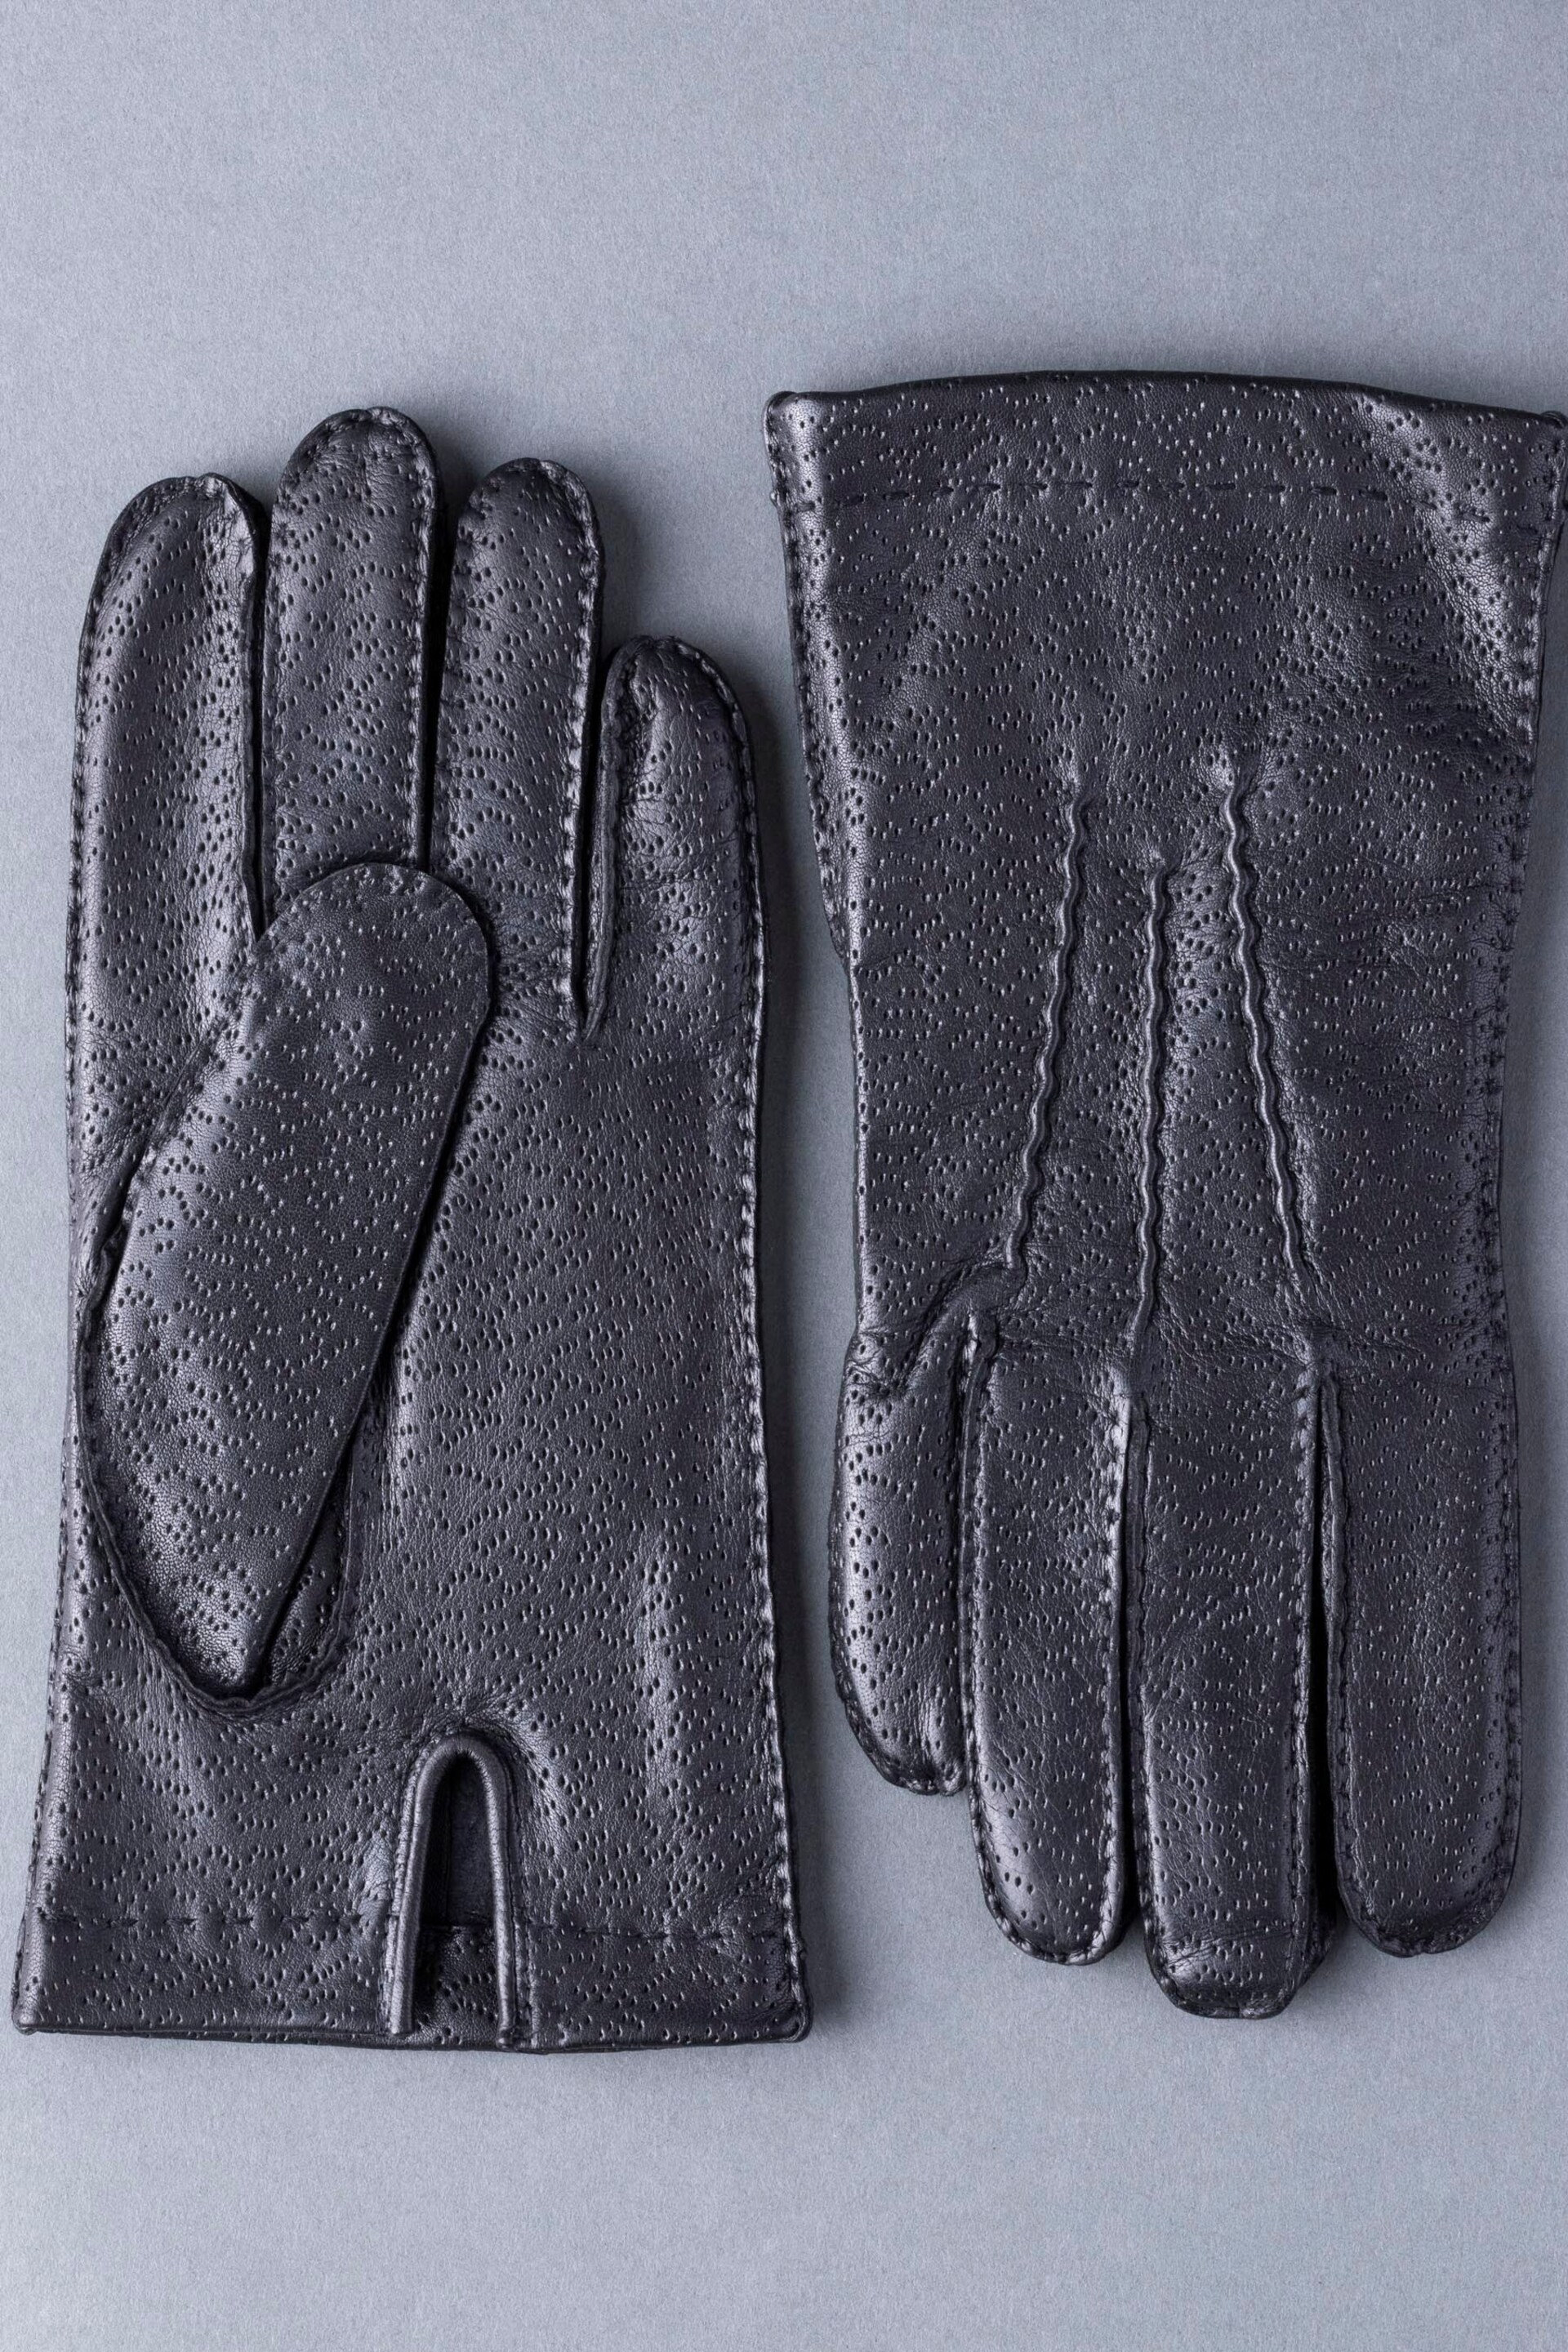 Lakeland Leather Black Phil Leather Gloves - Image 1 of 3